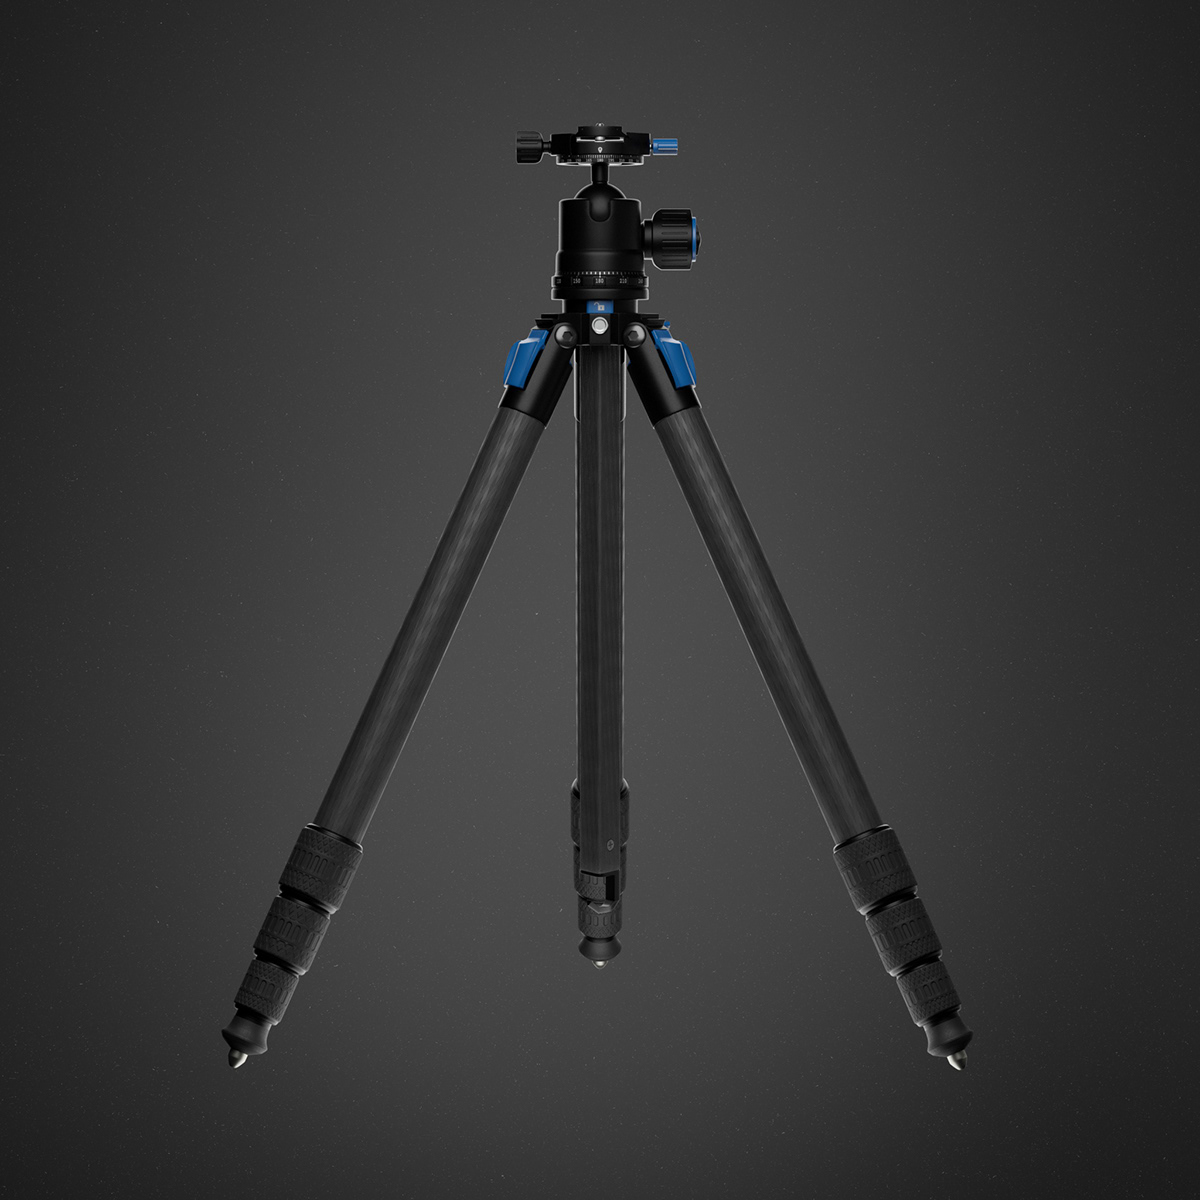 3dmodel black studio Realism details camera mount ballhead photo equipment tripod